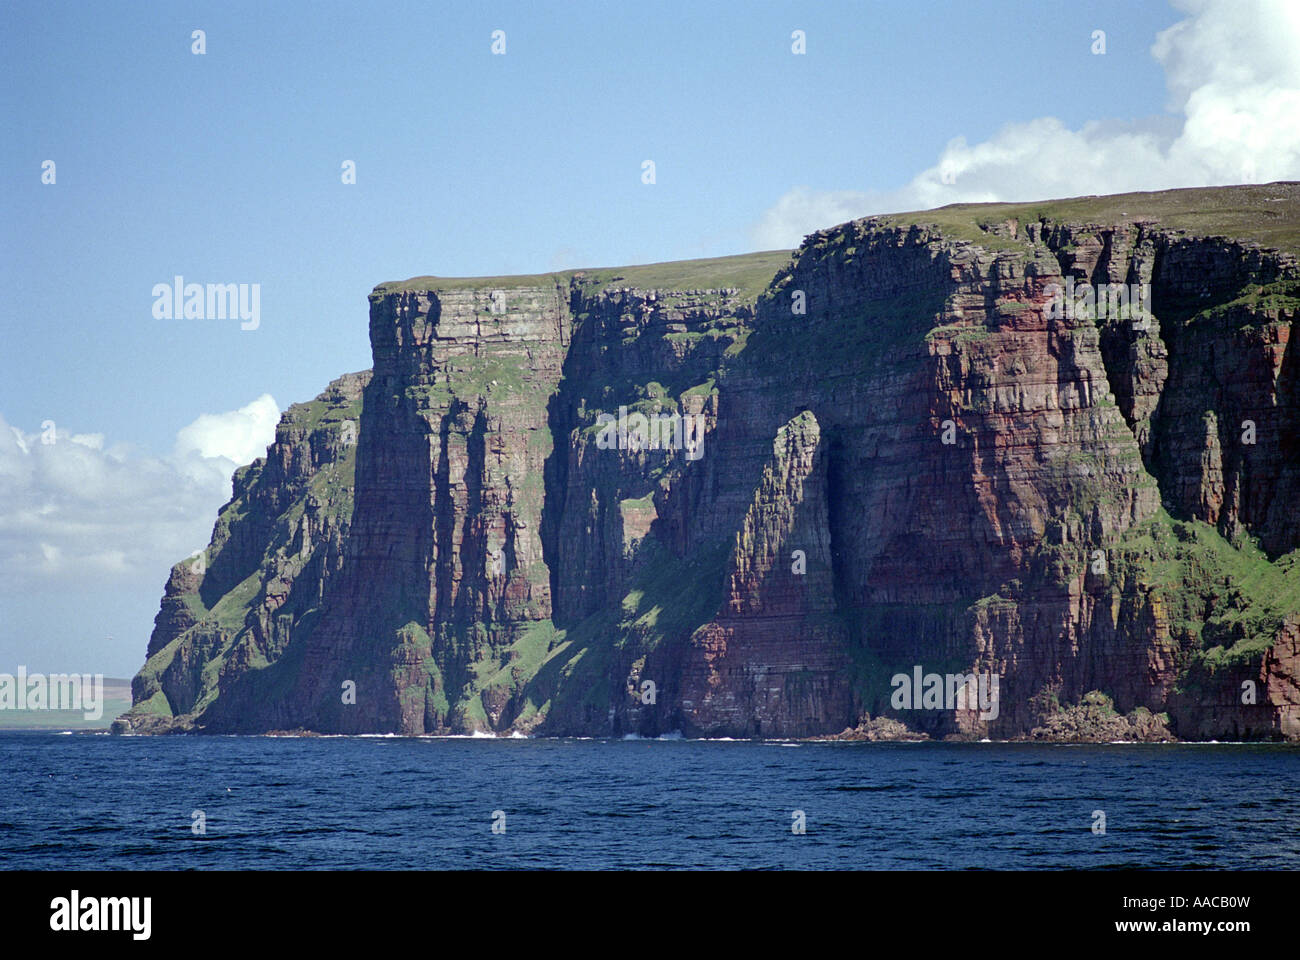 st john's head sea cliff's 378m above sea level isle of hoy scotland uk gb Stock Photo